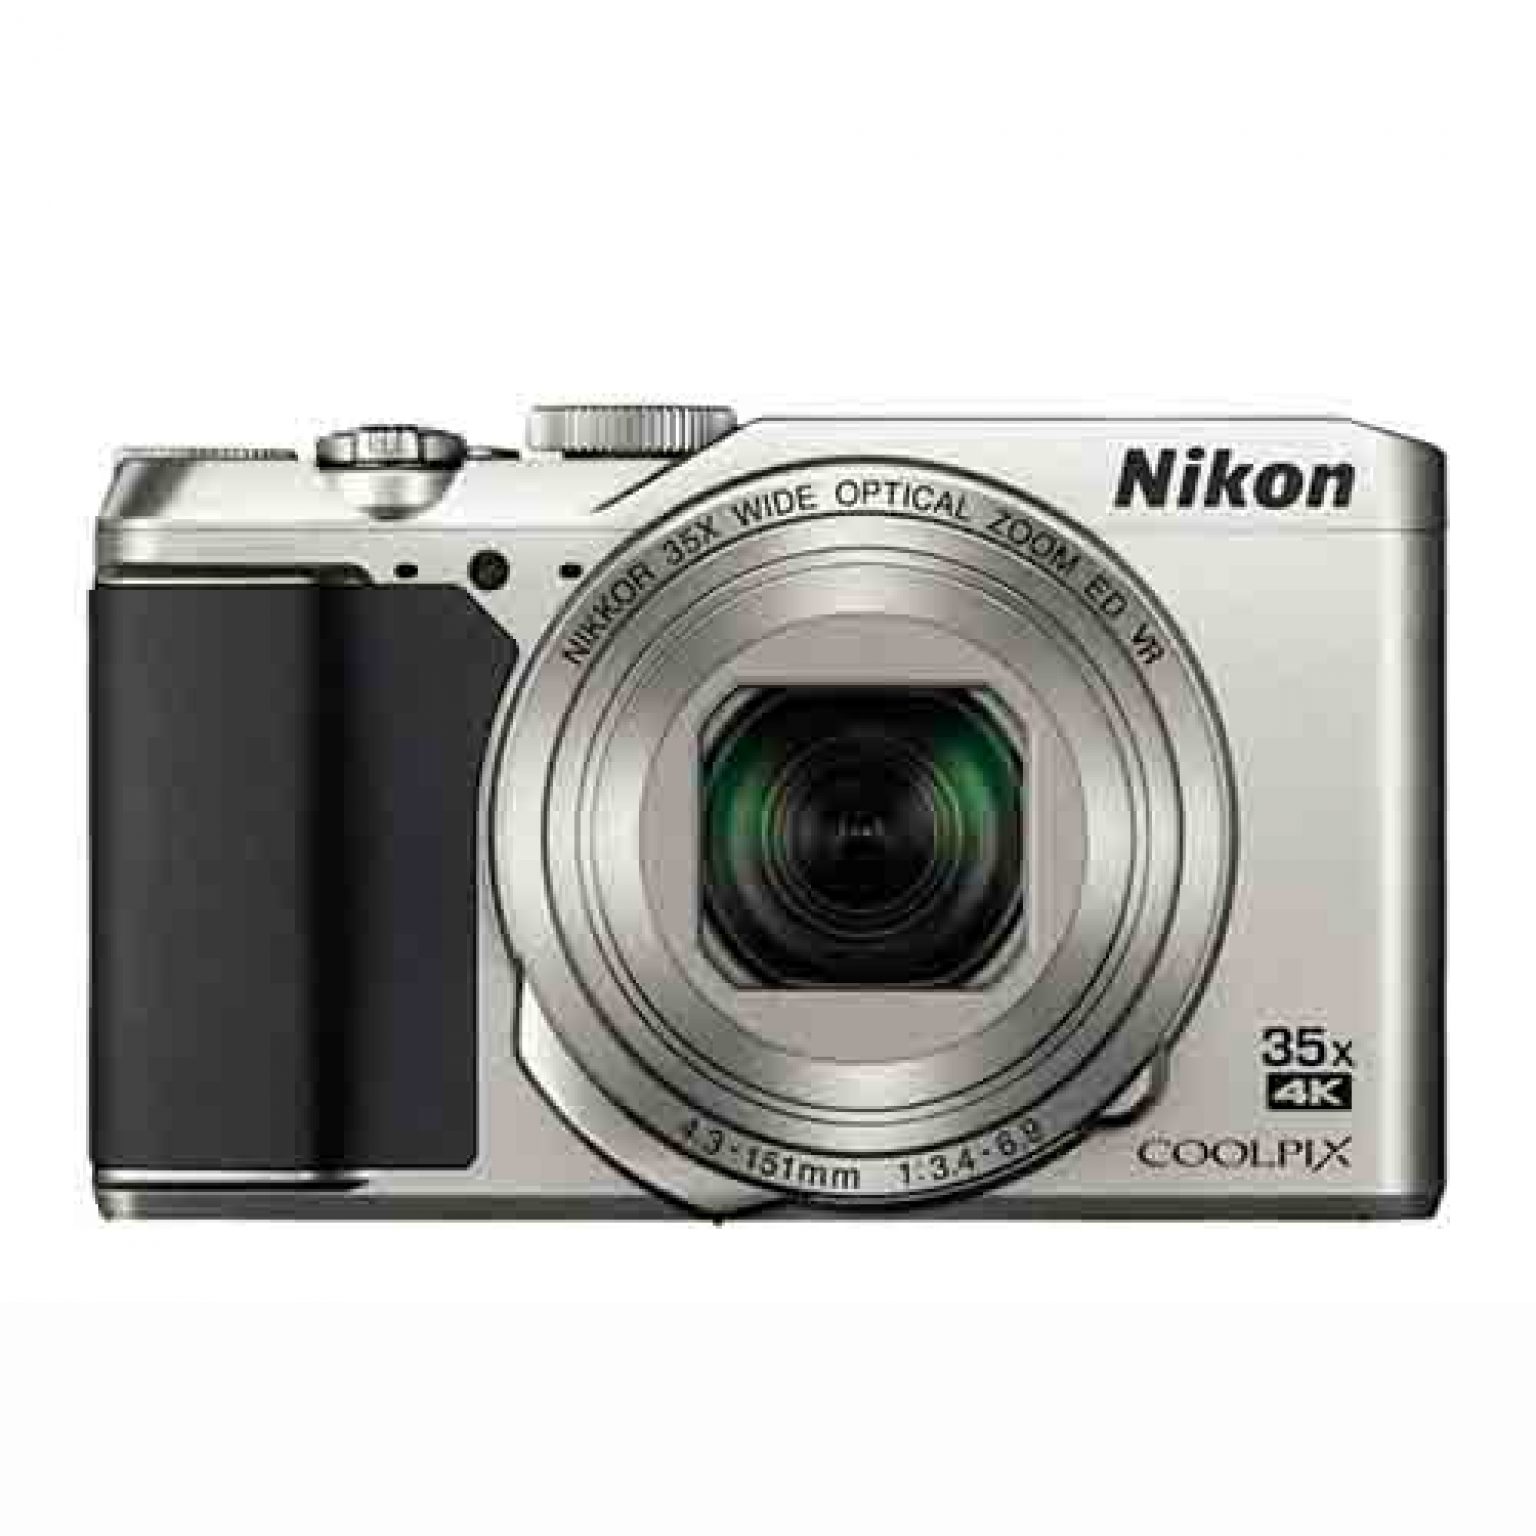 Nikon Coolpix A900 4K Digital Camera Price in Pakistan 2020 – Compare